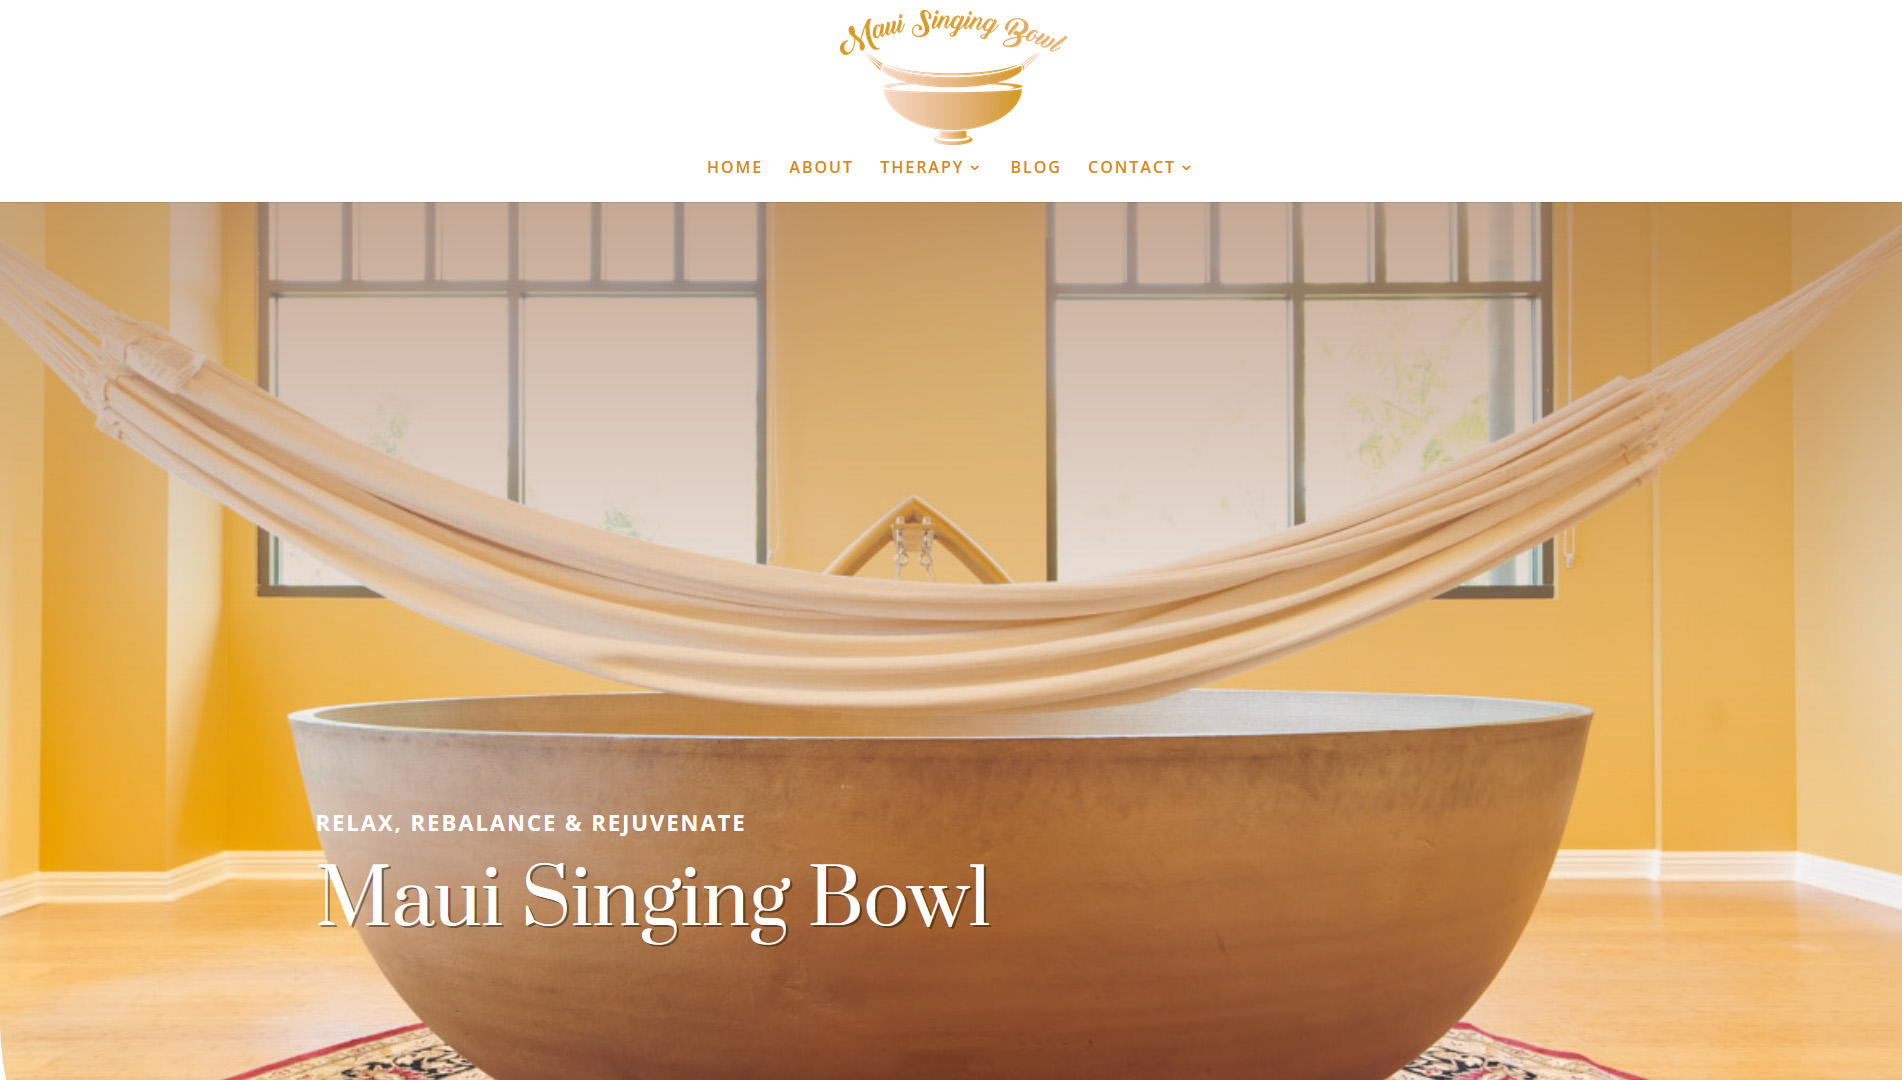 Maui Singing Bowl Website Designed by Aloha Growers